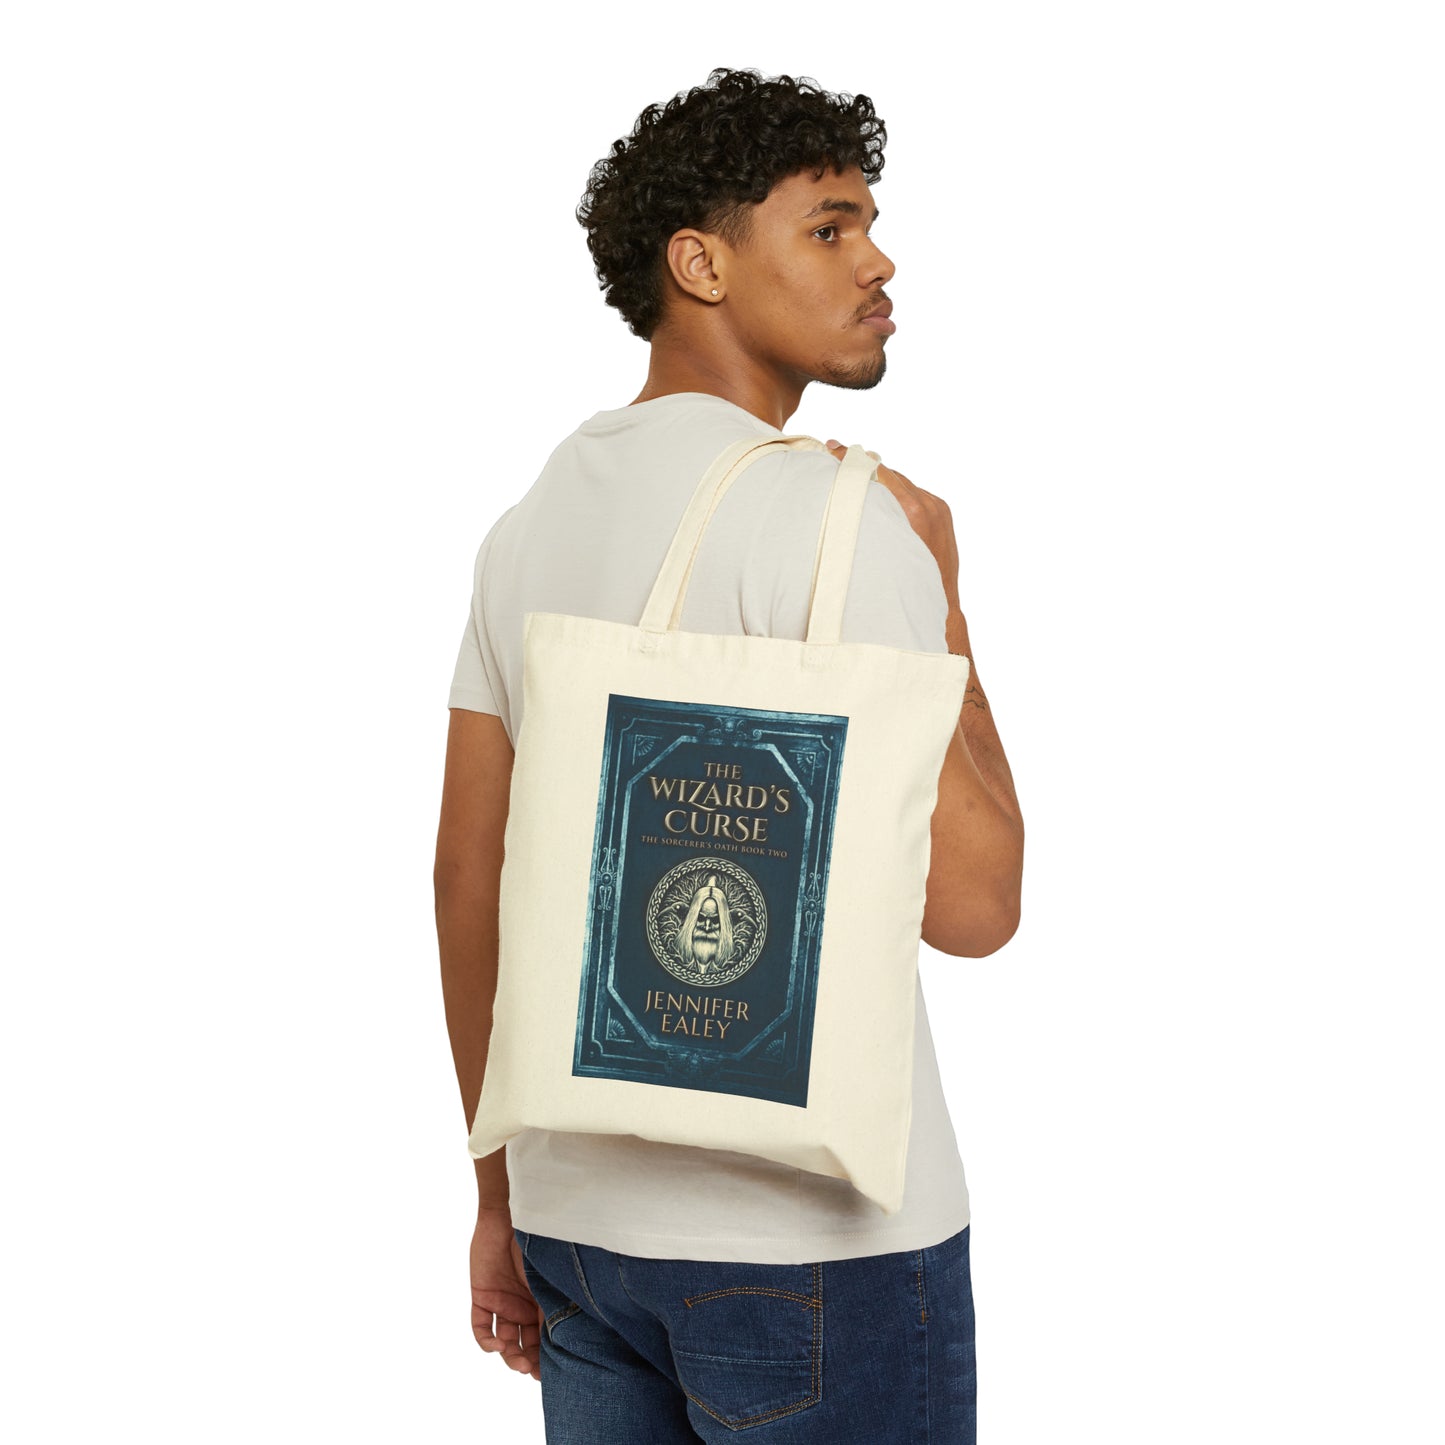 The Wizard's Curse - Cotton Canvas Tote Bag